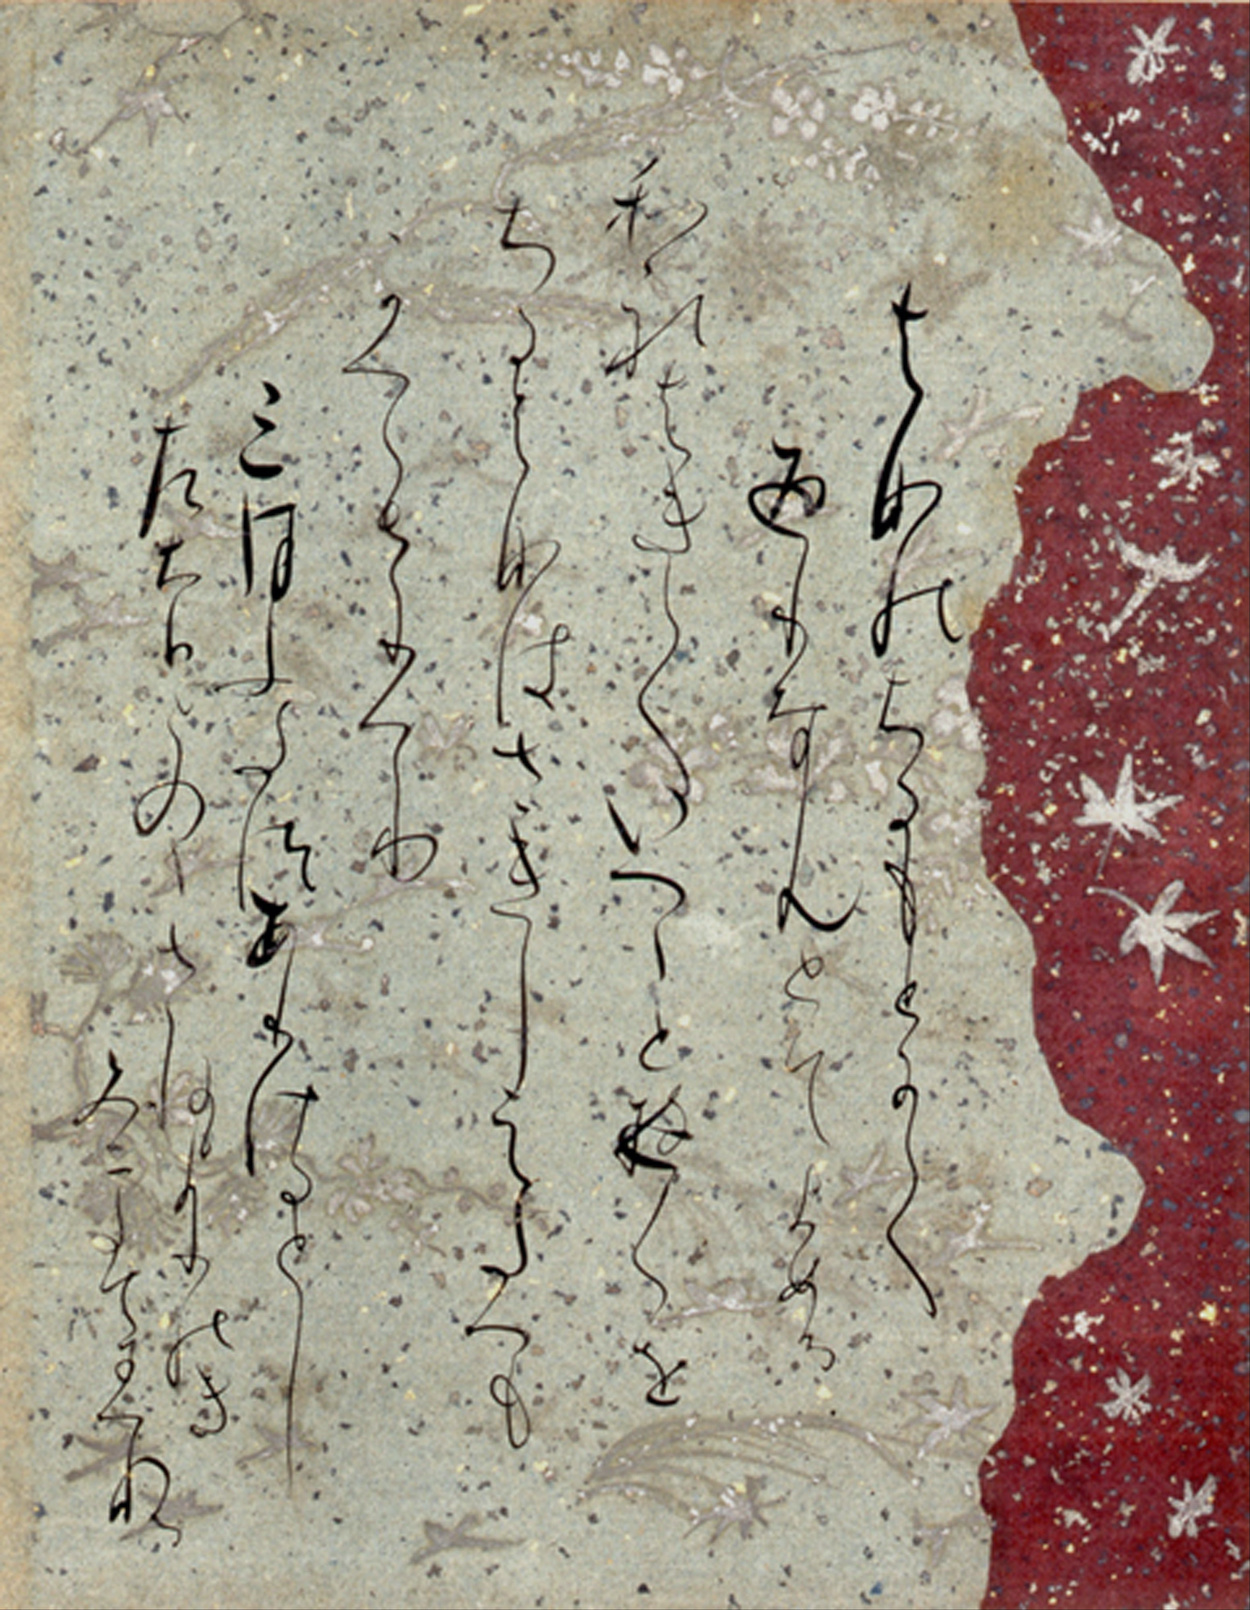 Fujiwara no Sadanobu (attrib.) - 1088 - February 10, 1156